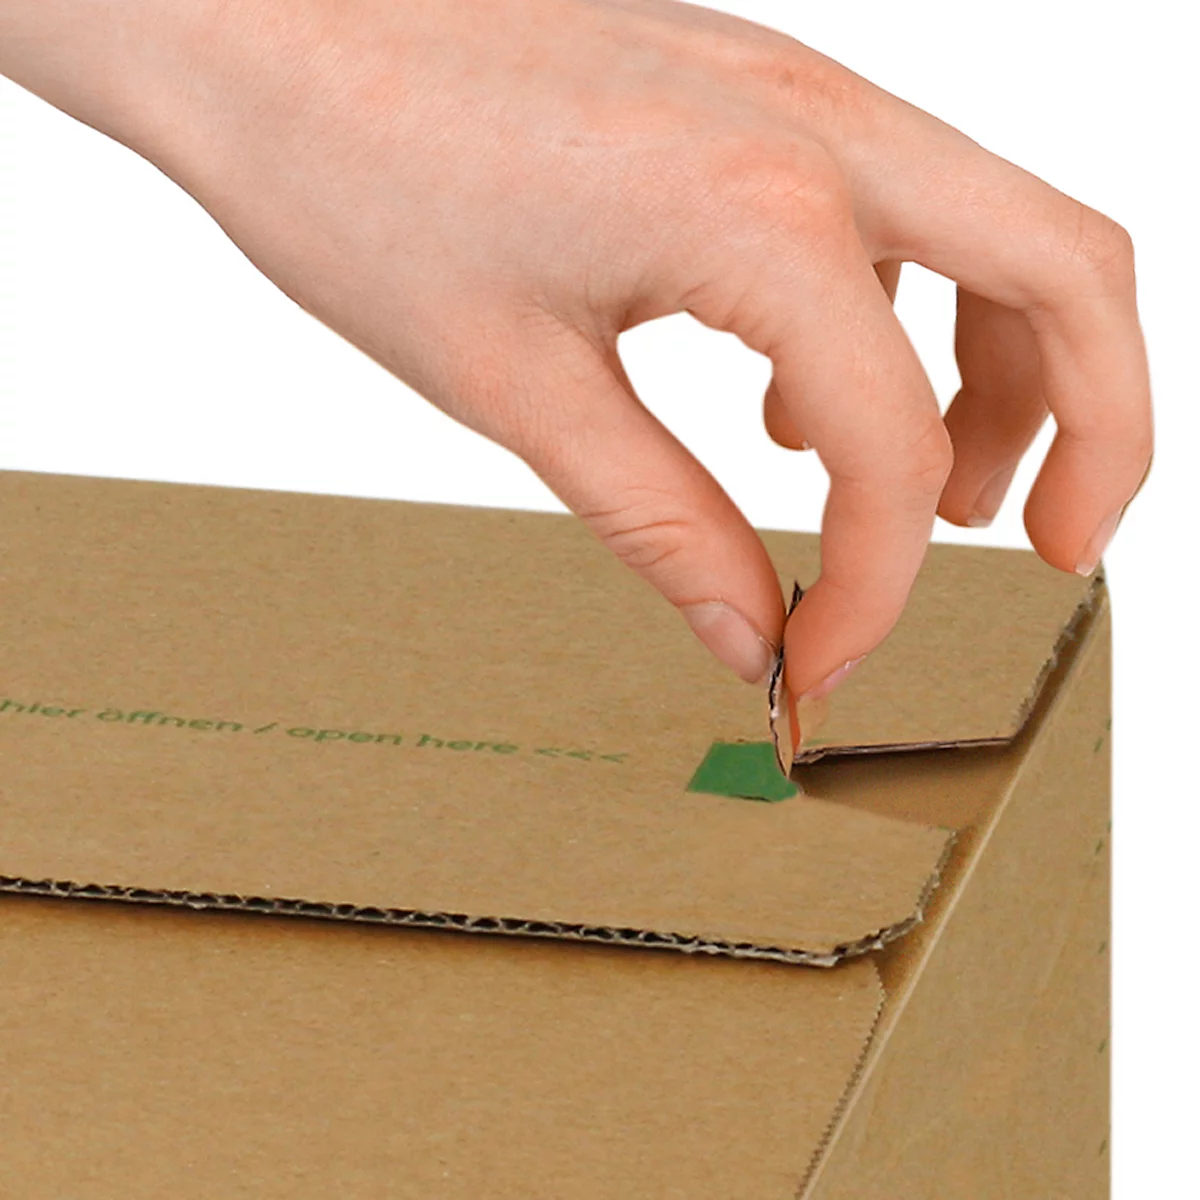 Cajas de envío Grünmarie®, 150 x 100 x 150 mm, optimizadas para paletas, fondo automático, hasta 20 kg, 100 % reciclable, cartón ondulado FSC®, marrón, 20 unidades